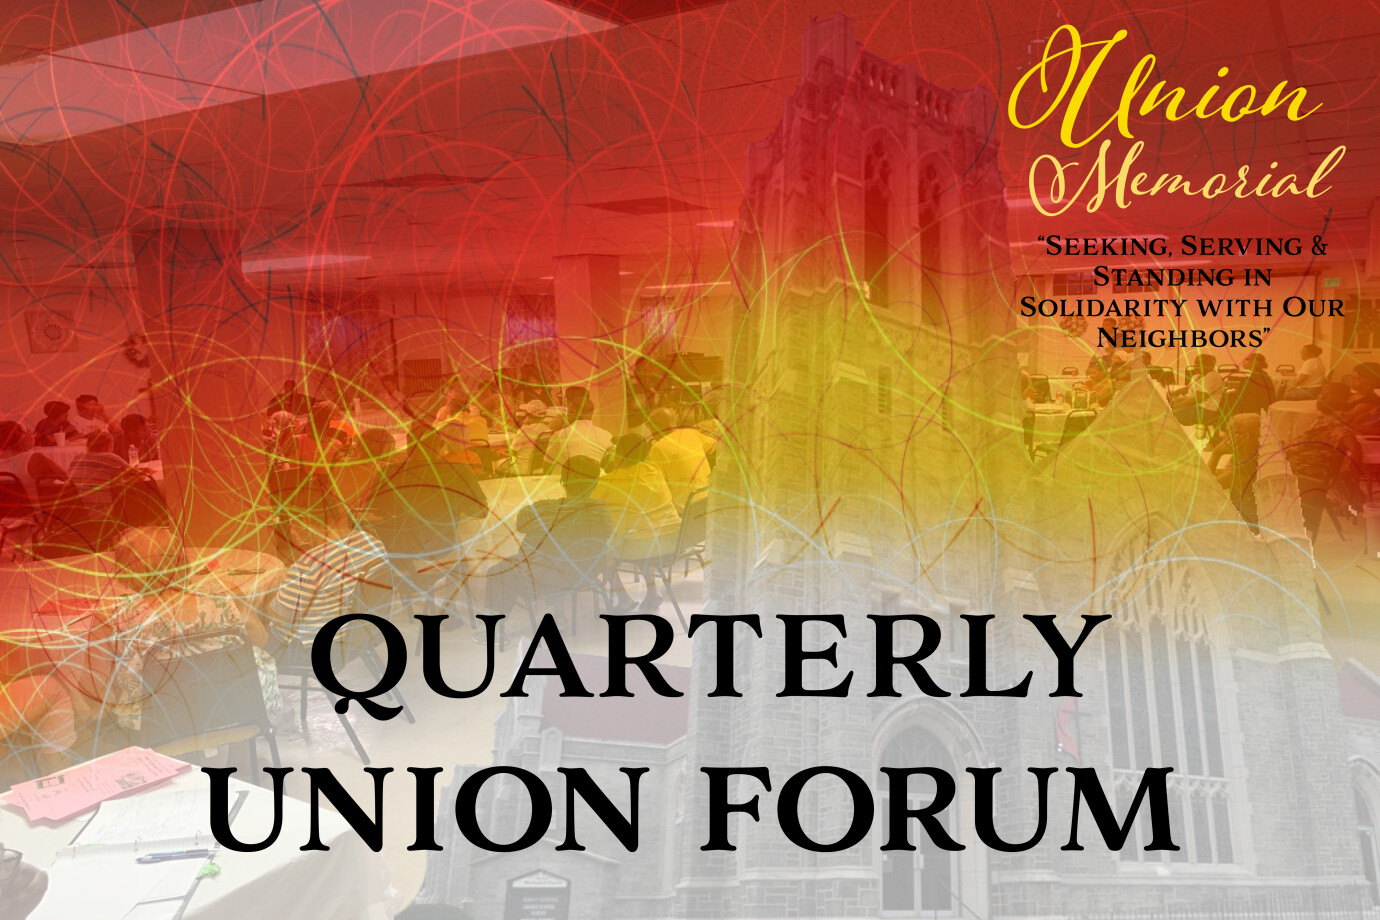 Quarterly Union Forum